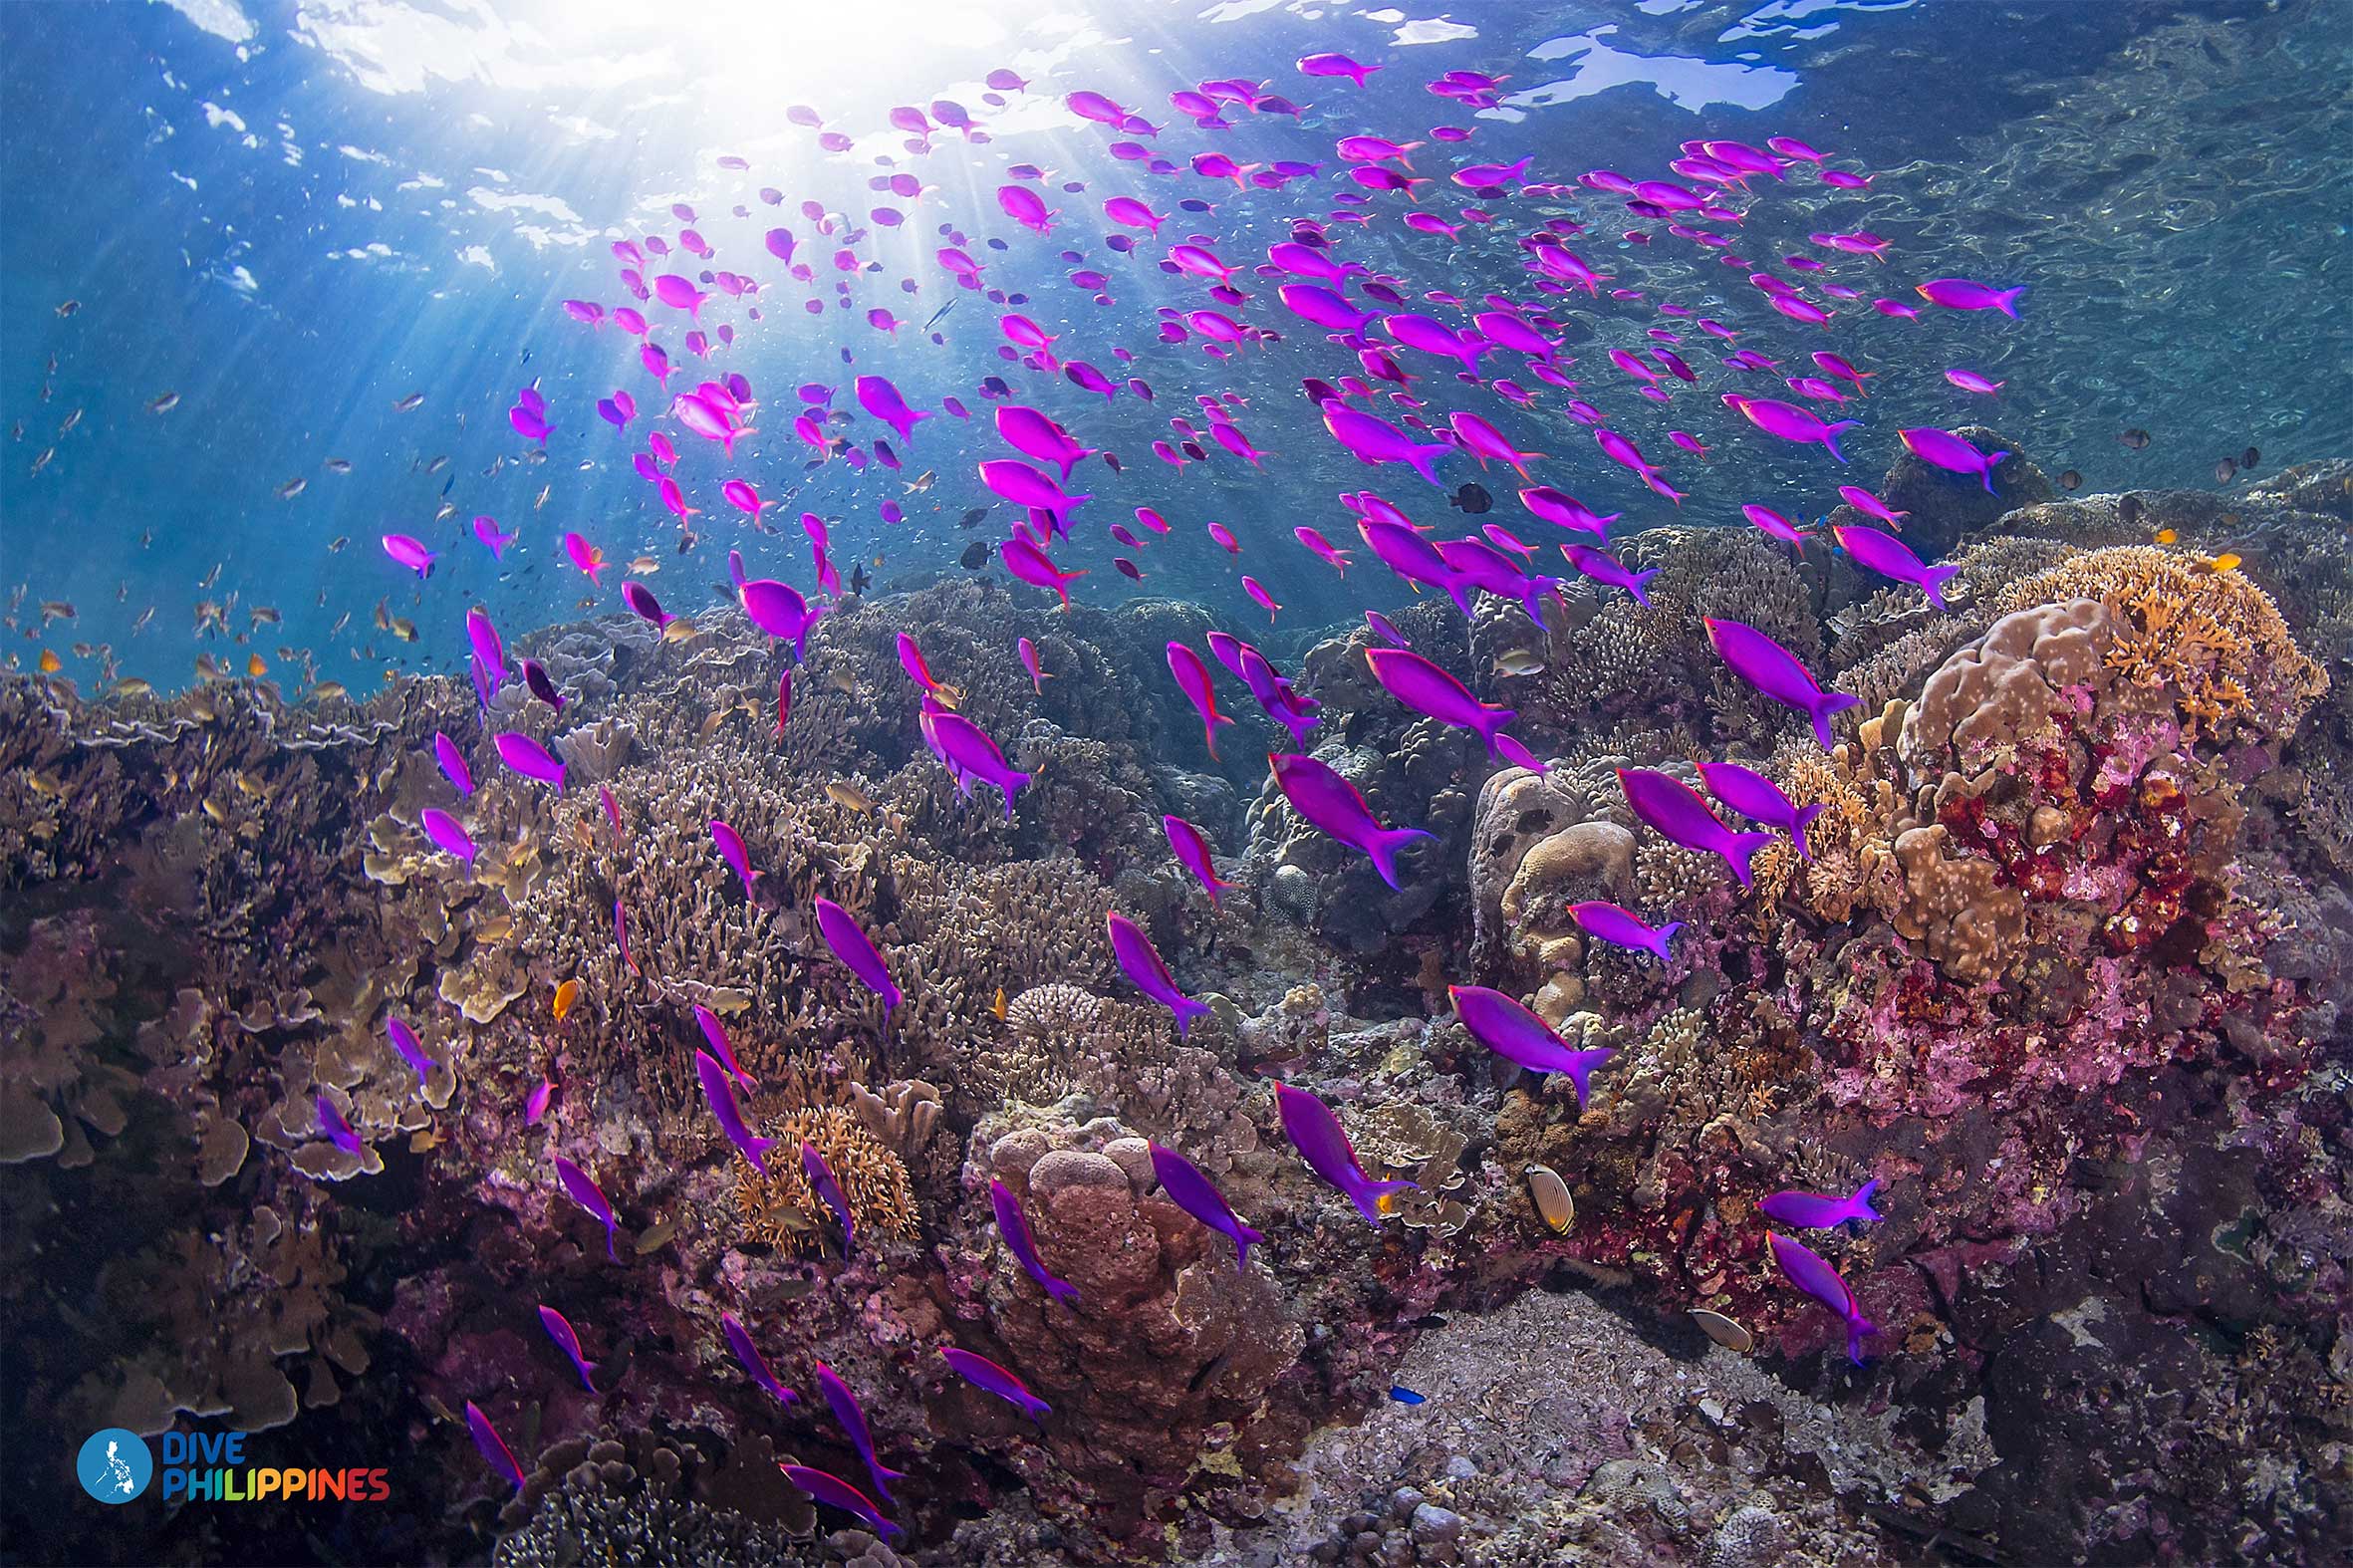 Five Philippine dive spots you can now visit